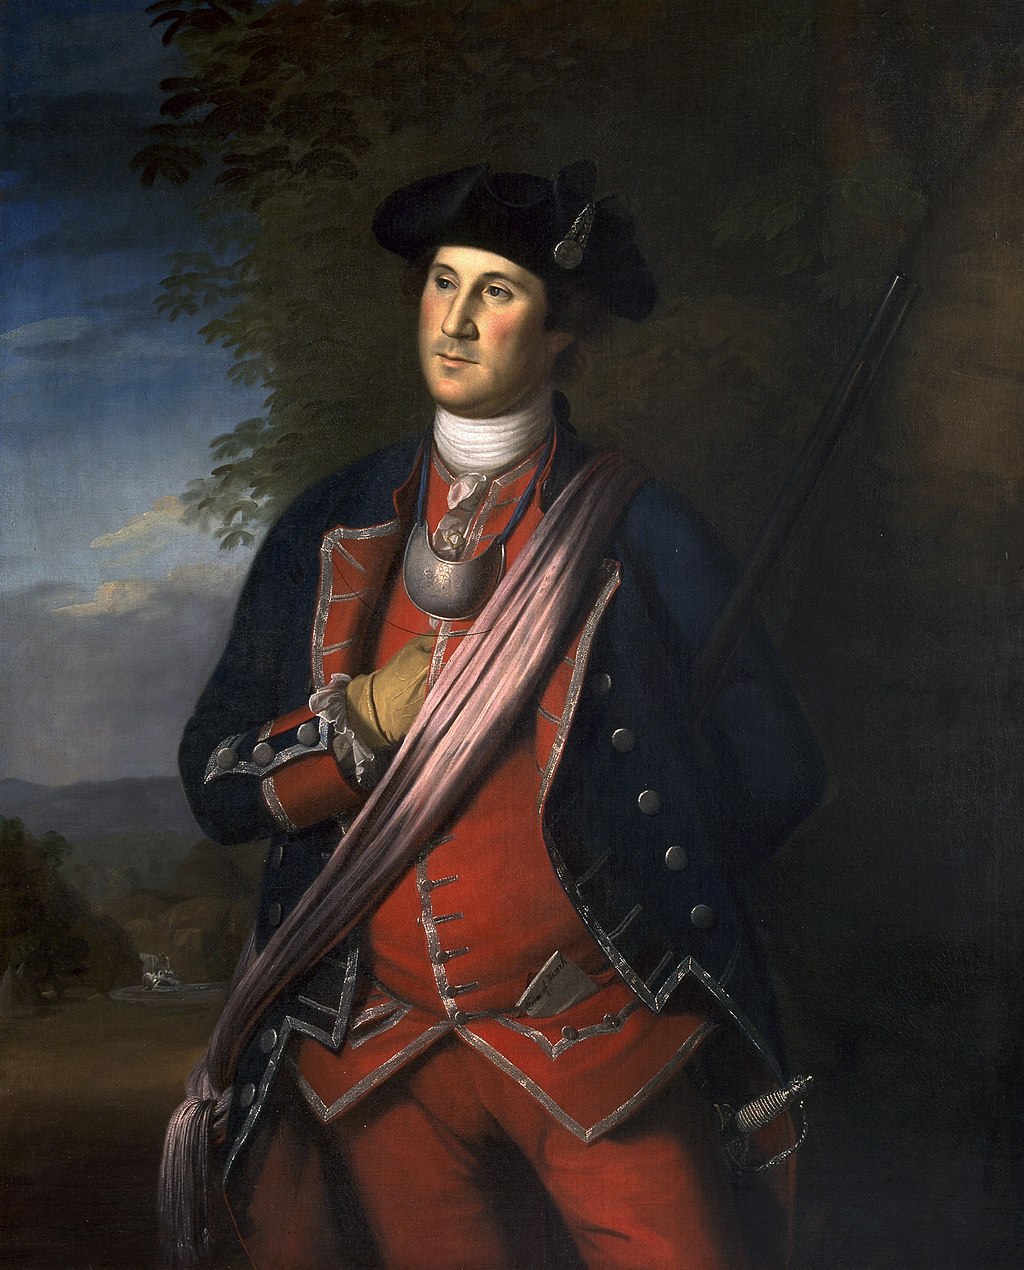 George Washington in uniform. Image via Wikimedia Commons.